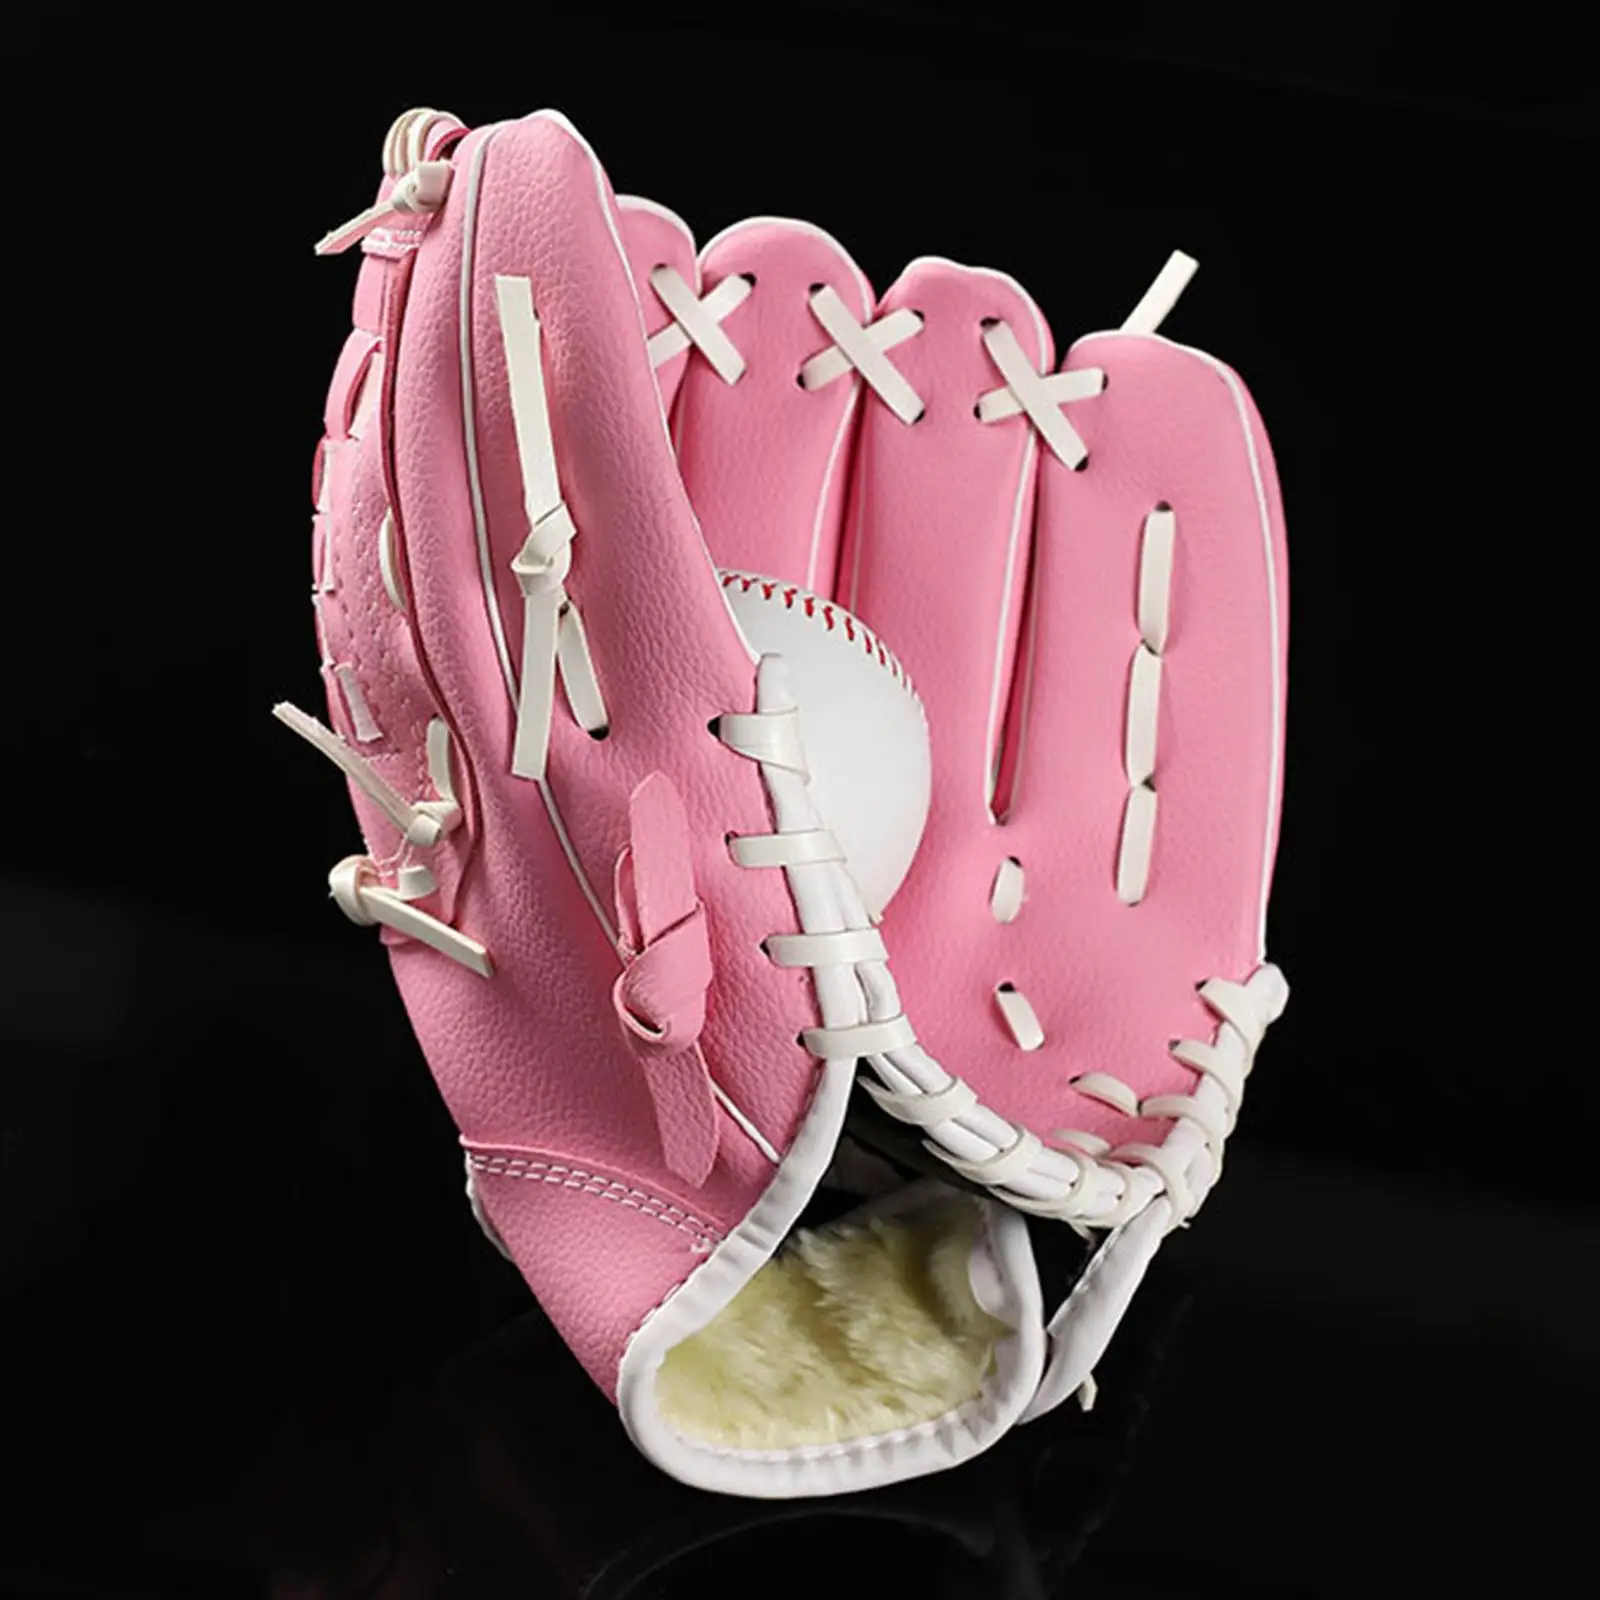 PU Leather Baseball Softball Fielding Glove for Training Match